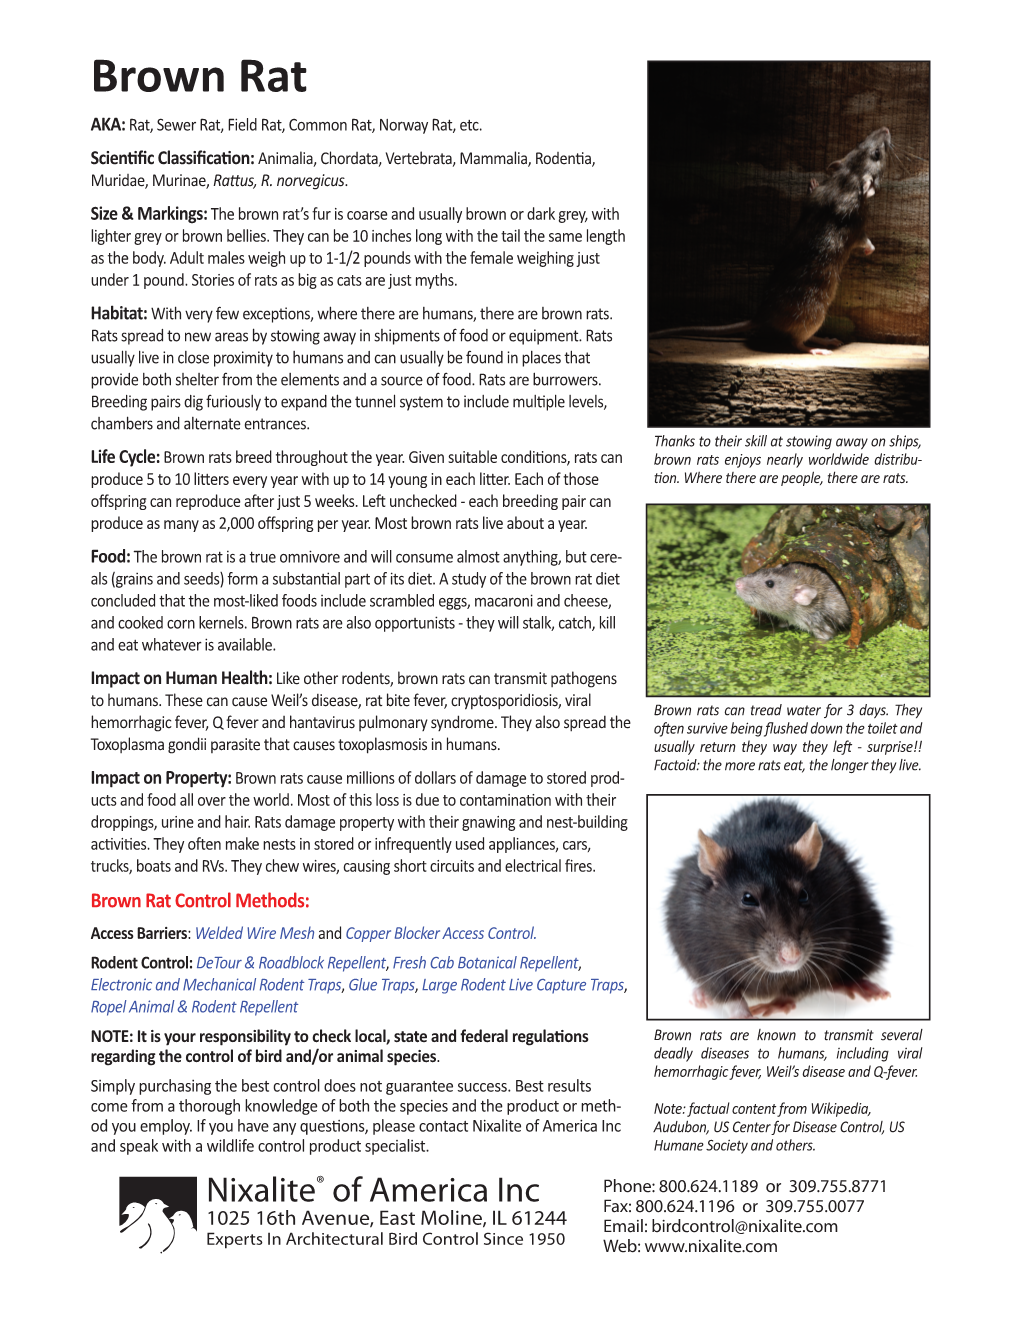 Brown Rat AKA: Rat, Sewer Rat, Field Rat, Common Rat, Norway Rat, Etc